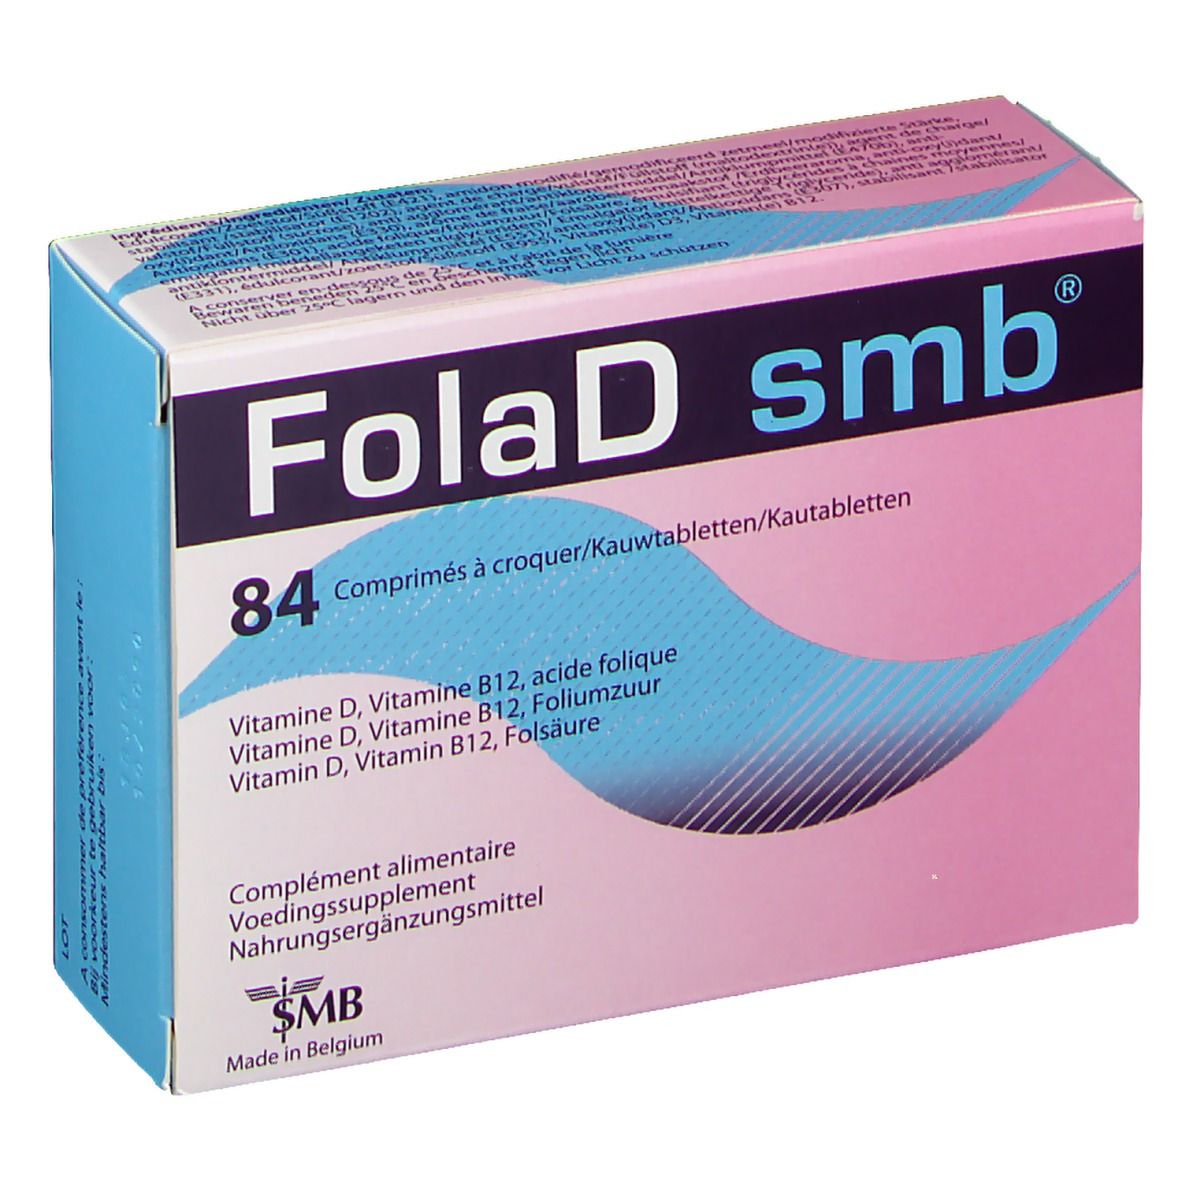 Image of FolaD smb®